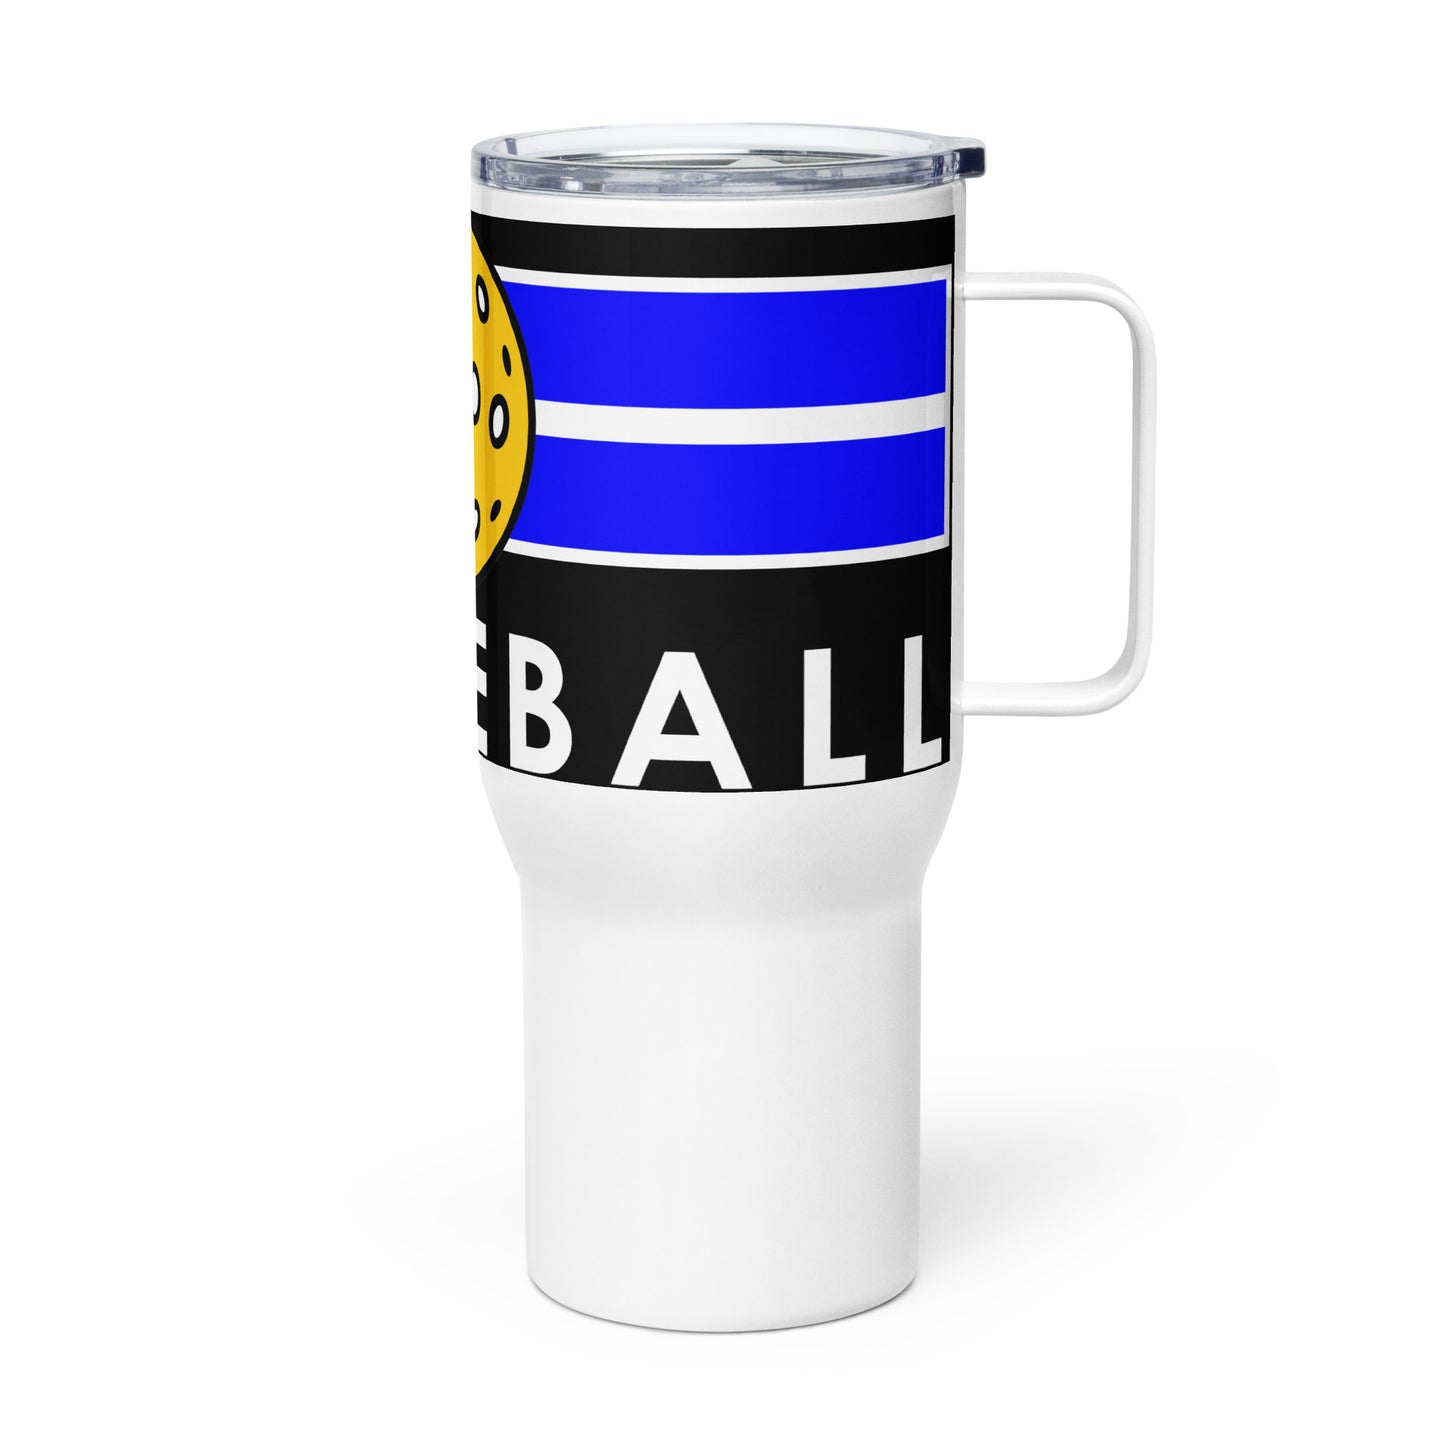 Travel mug with handle: Blue Court Pickleball